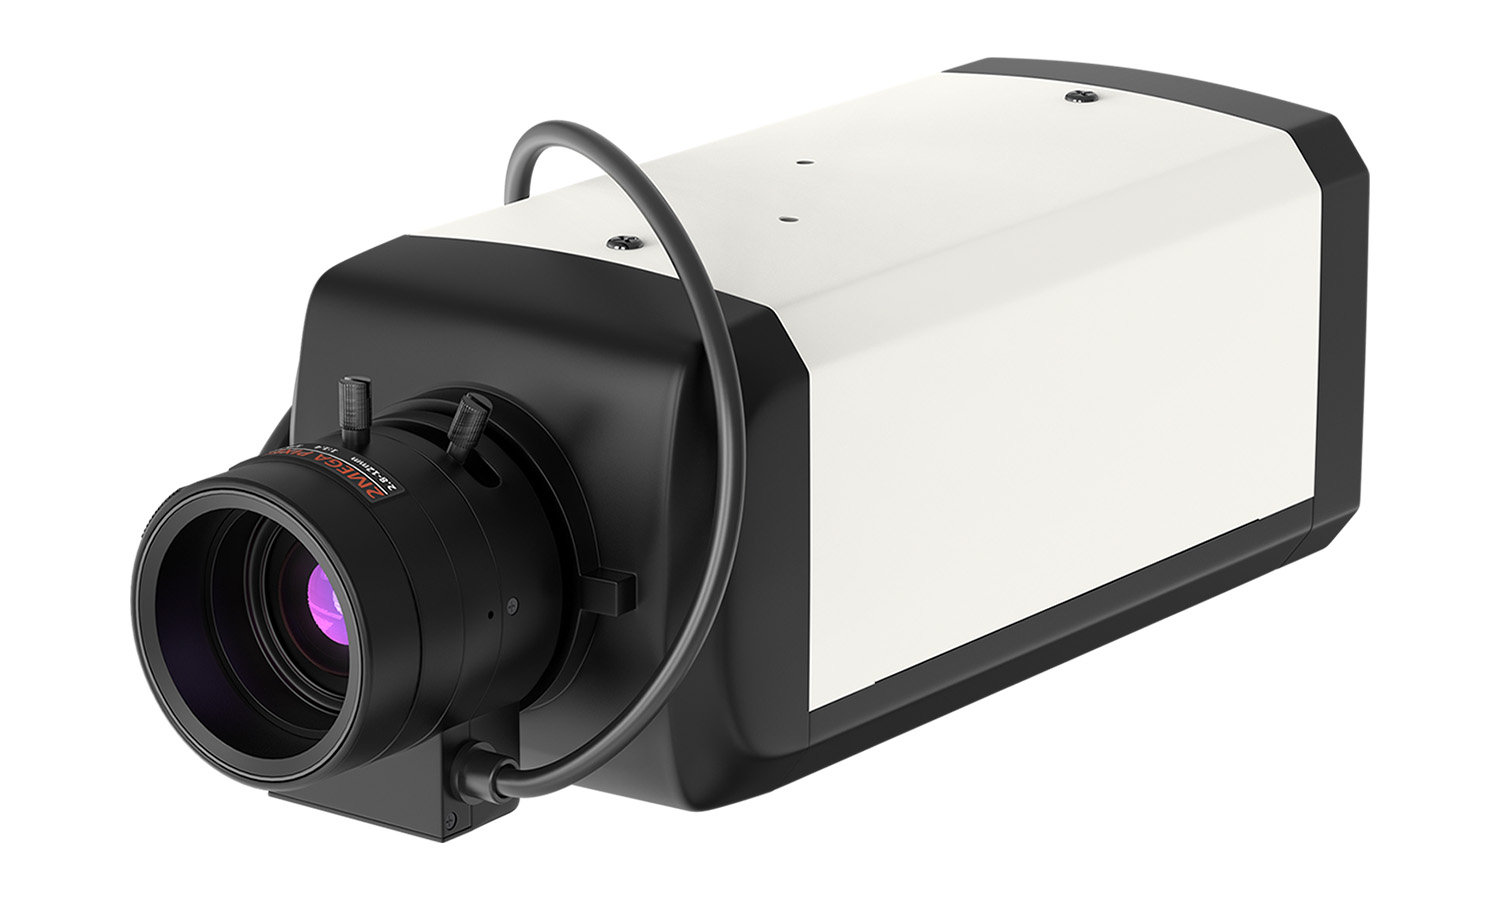 BG-BFS Full HD SDI IP Streaming Bullet Camera with 4X Optical Zoom Lens by BZBGEAR